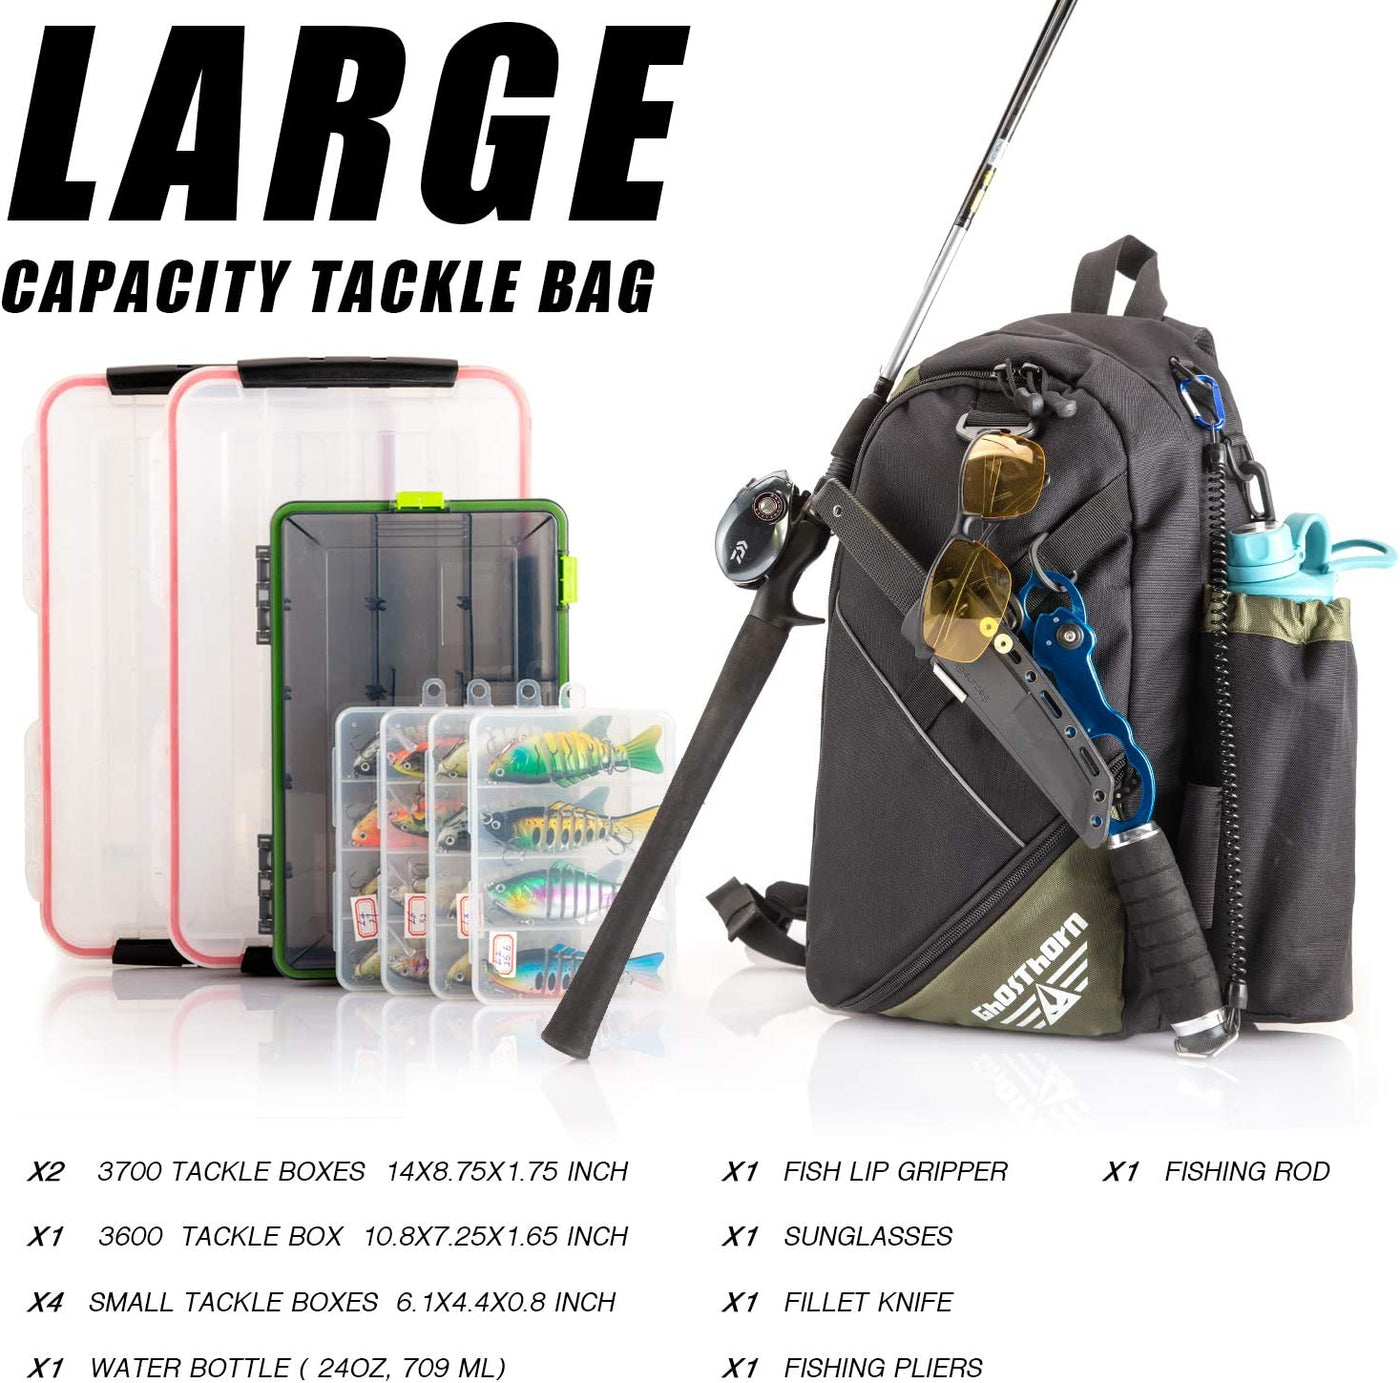 Ghosthorn Fishing Backpack Tackle Sling Bag - Fishing Backpack